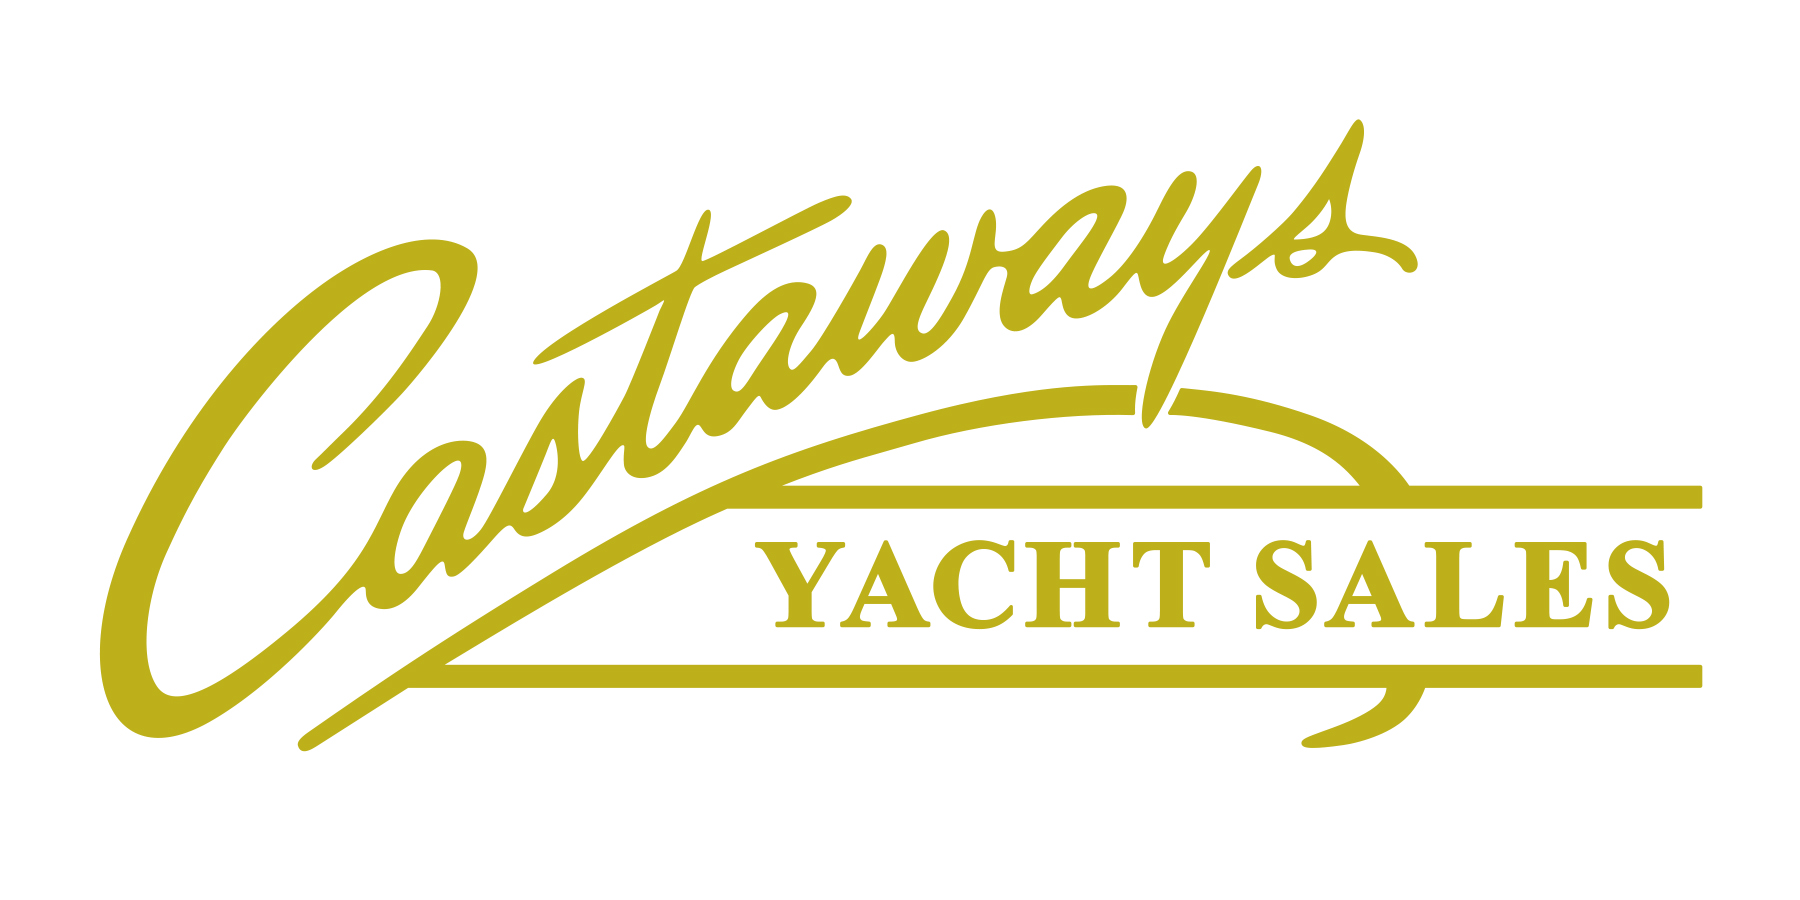 Castaways Yacht Sales Logo